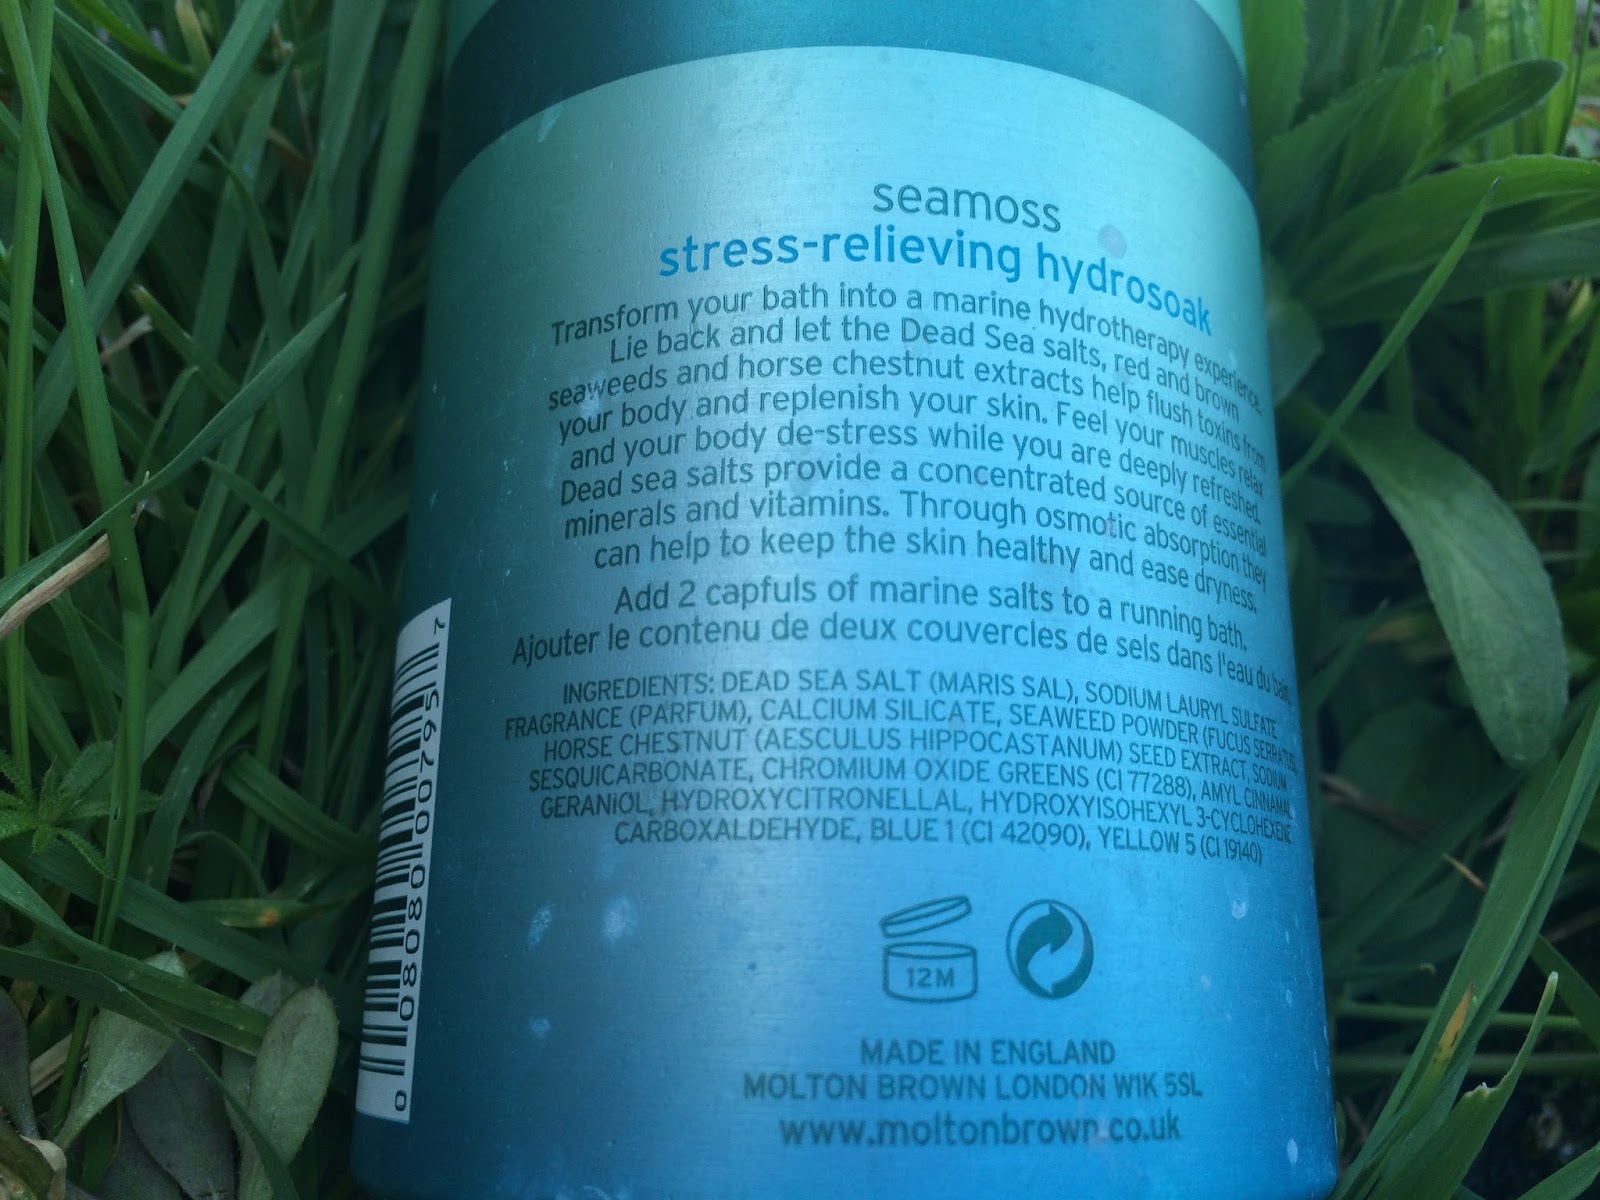 Molton Brown Seamoss Stress-relieving Hydrosoak